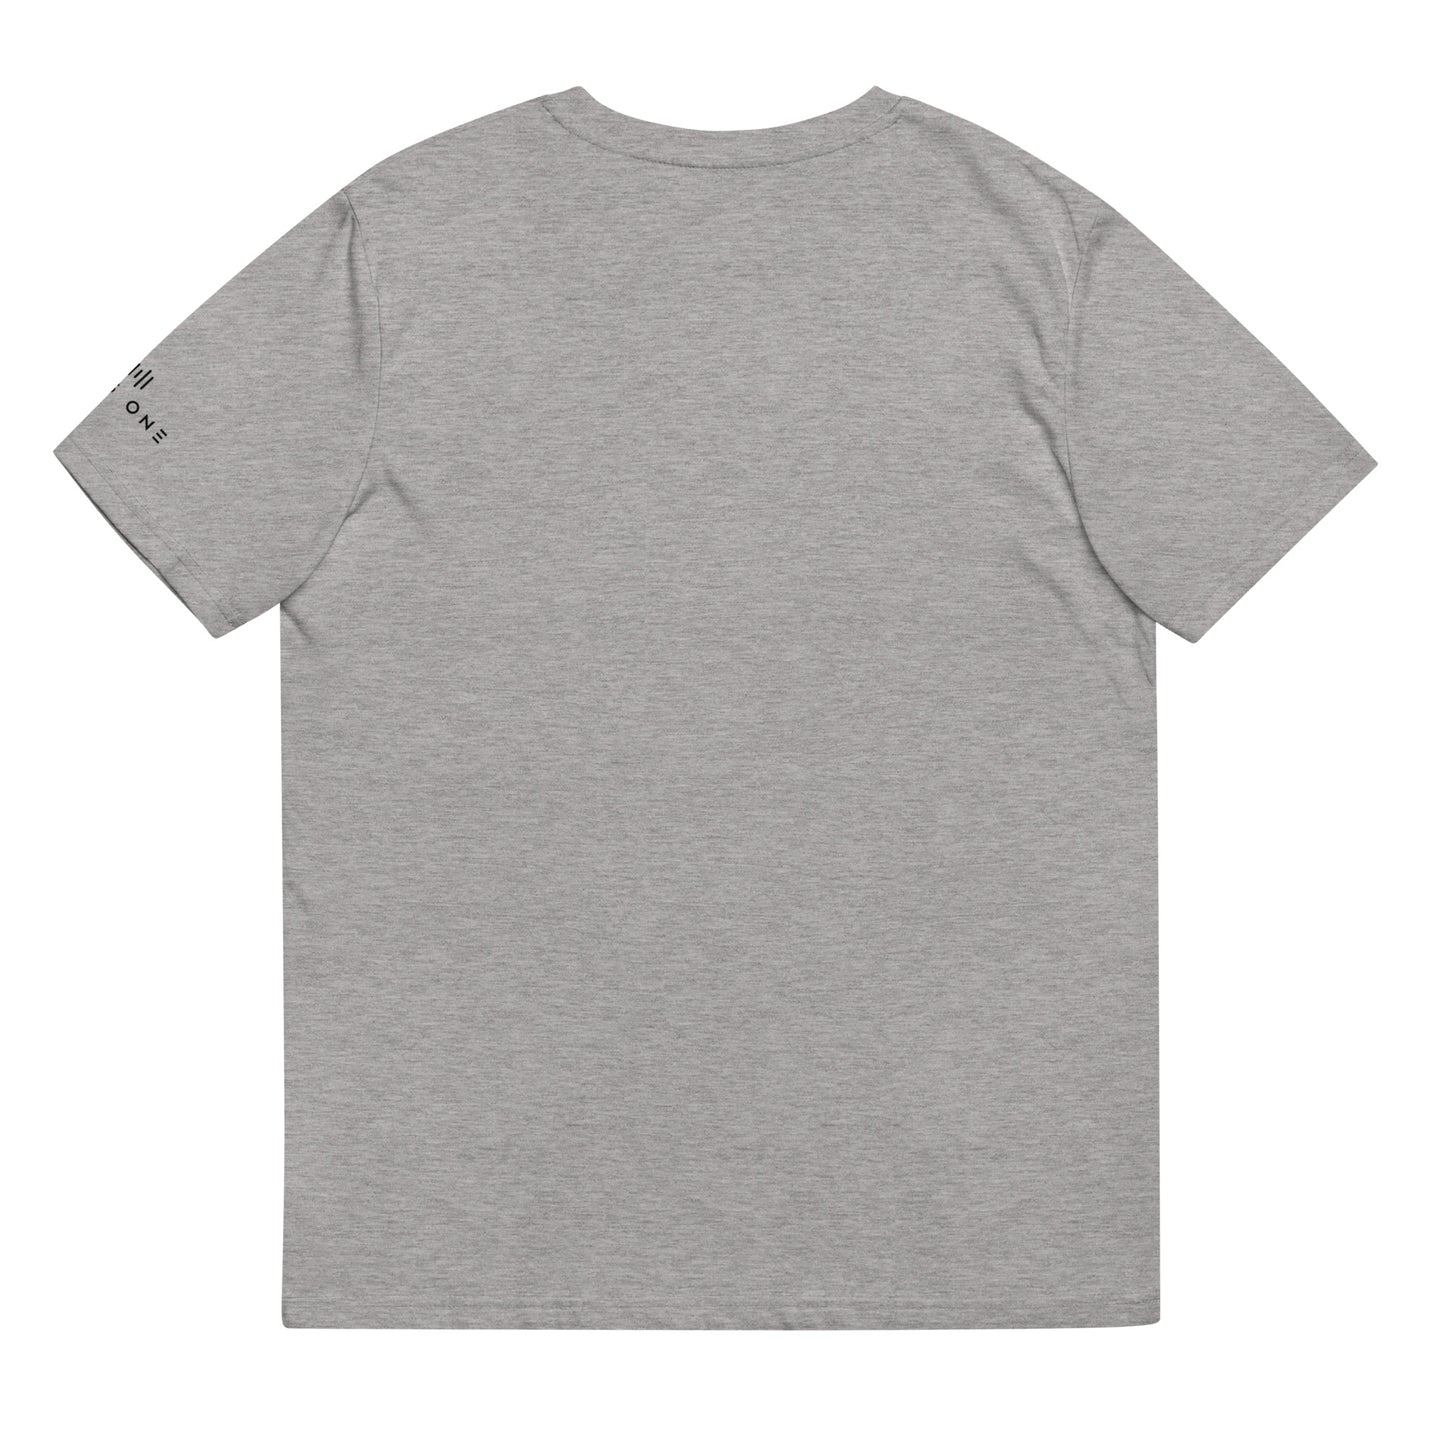 Tribe INFLUENTIAL (v3) Unisex organic cotton t-shirt